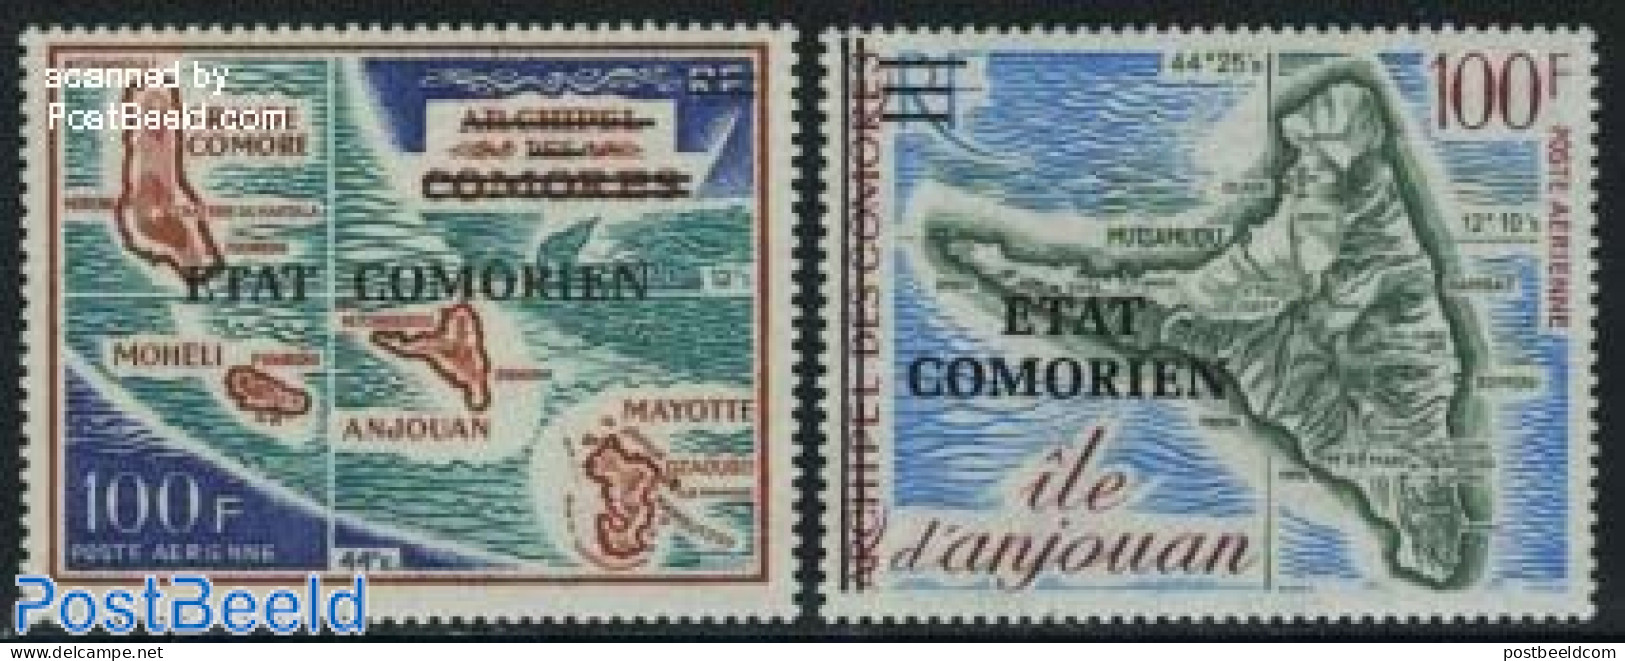 Comoros 1975 Maps, Overprints 2v, Mint NH, Various - Maps - Géographie